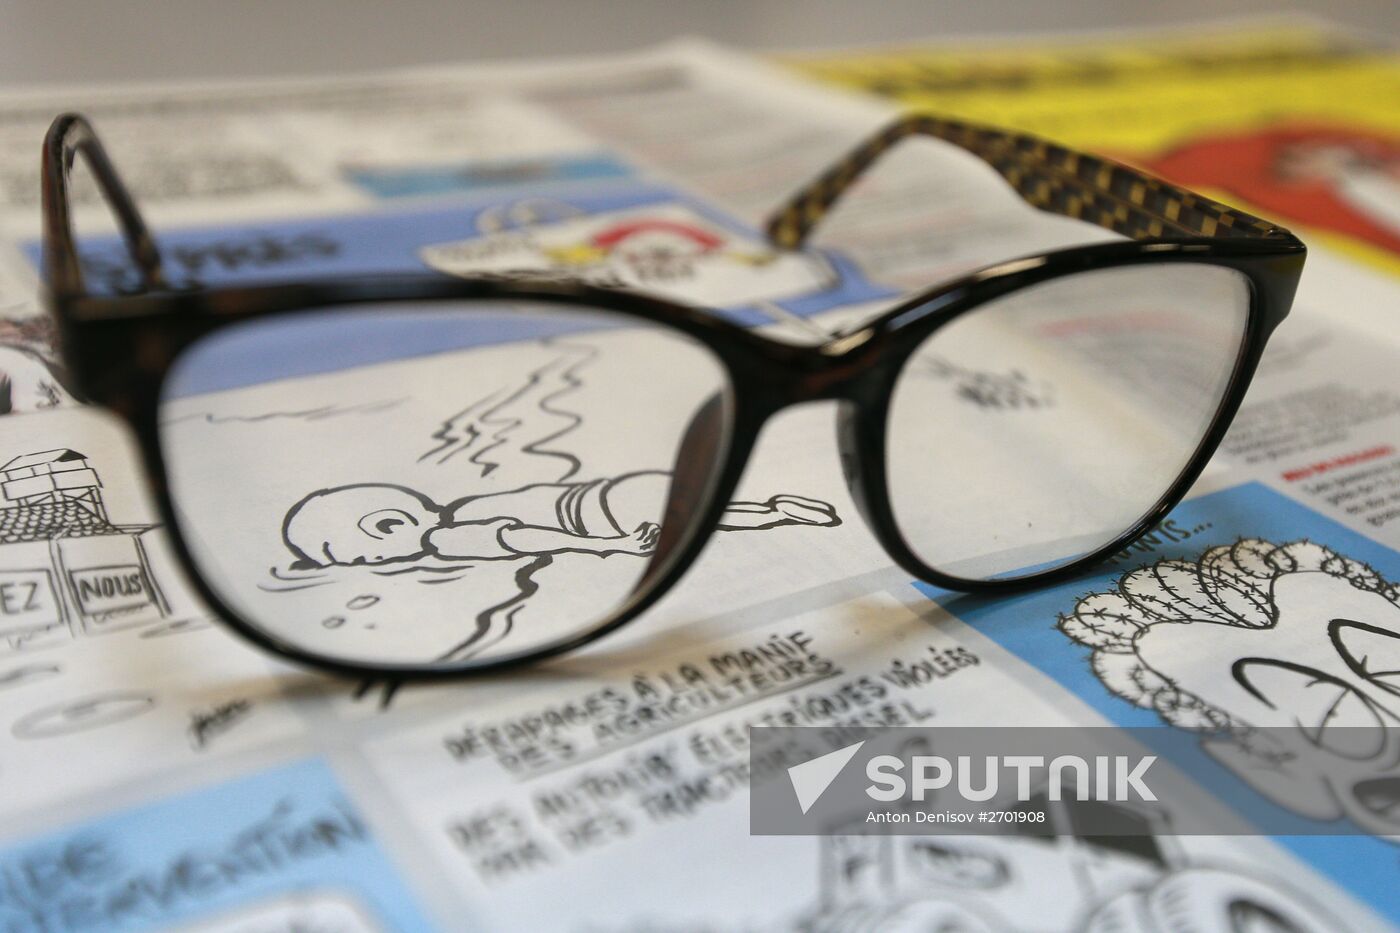 Charlie Hebdo published cartoons mocking drowned Syrian boy